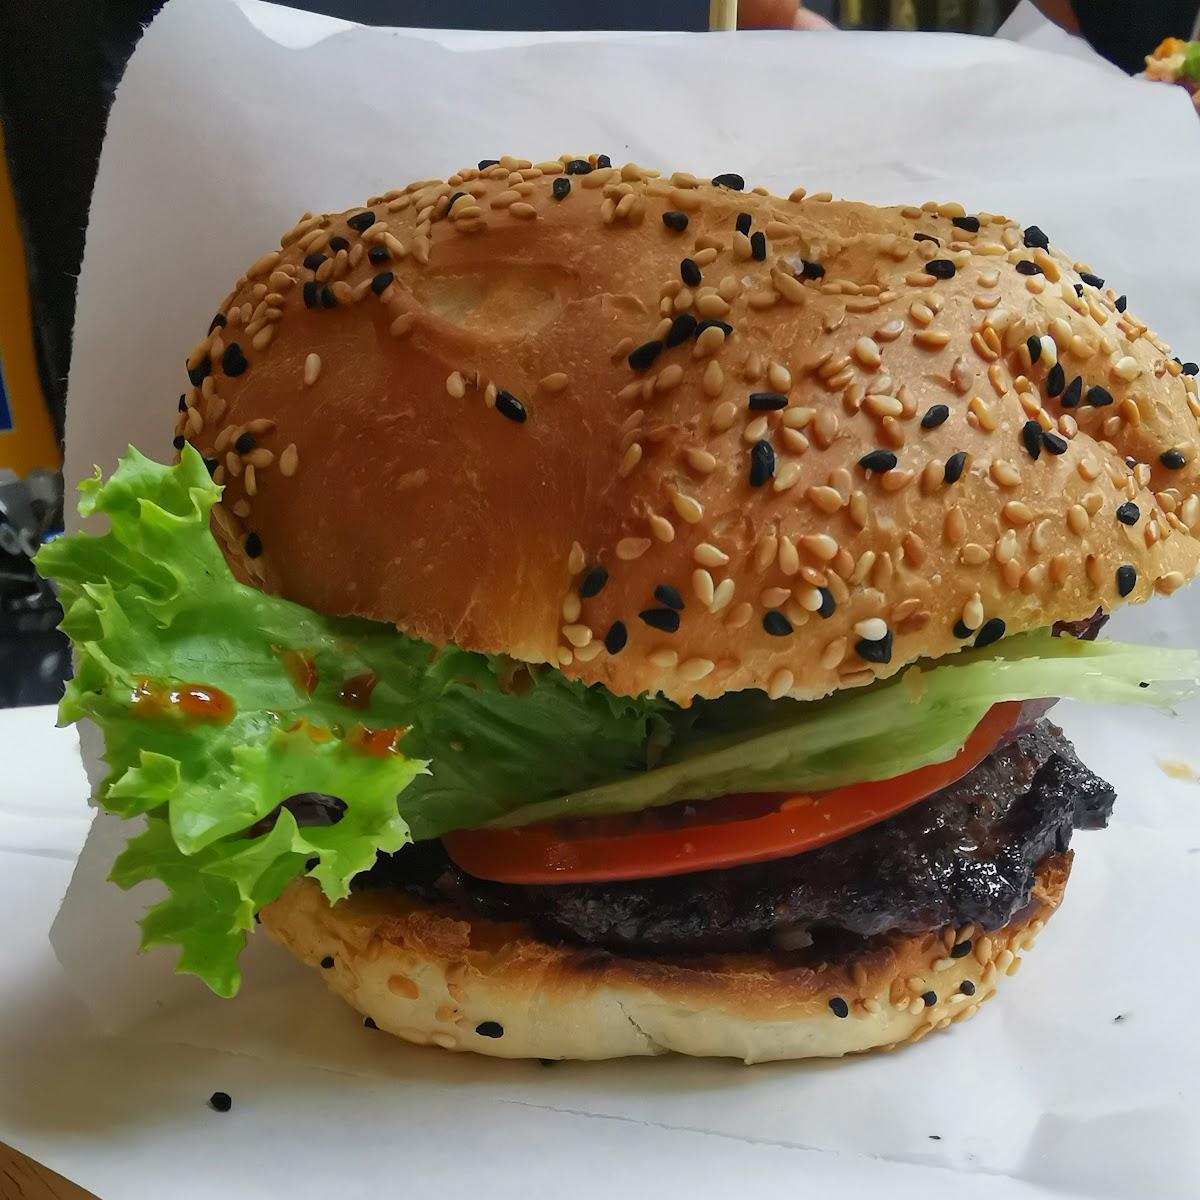 Restaurant "Burger Manufaktur" in Berlin